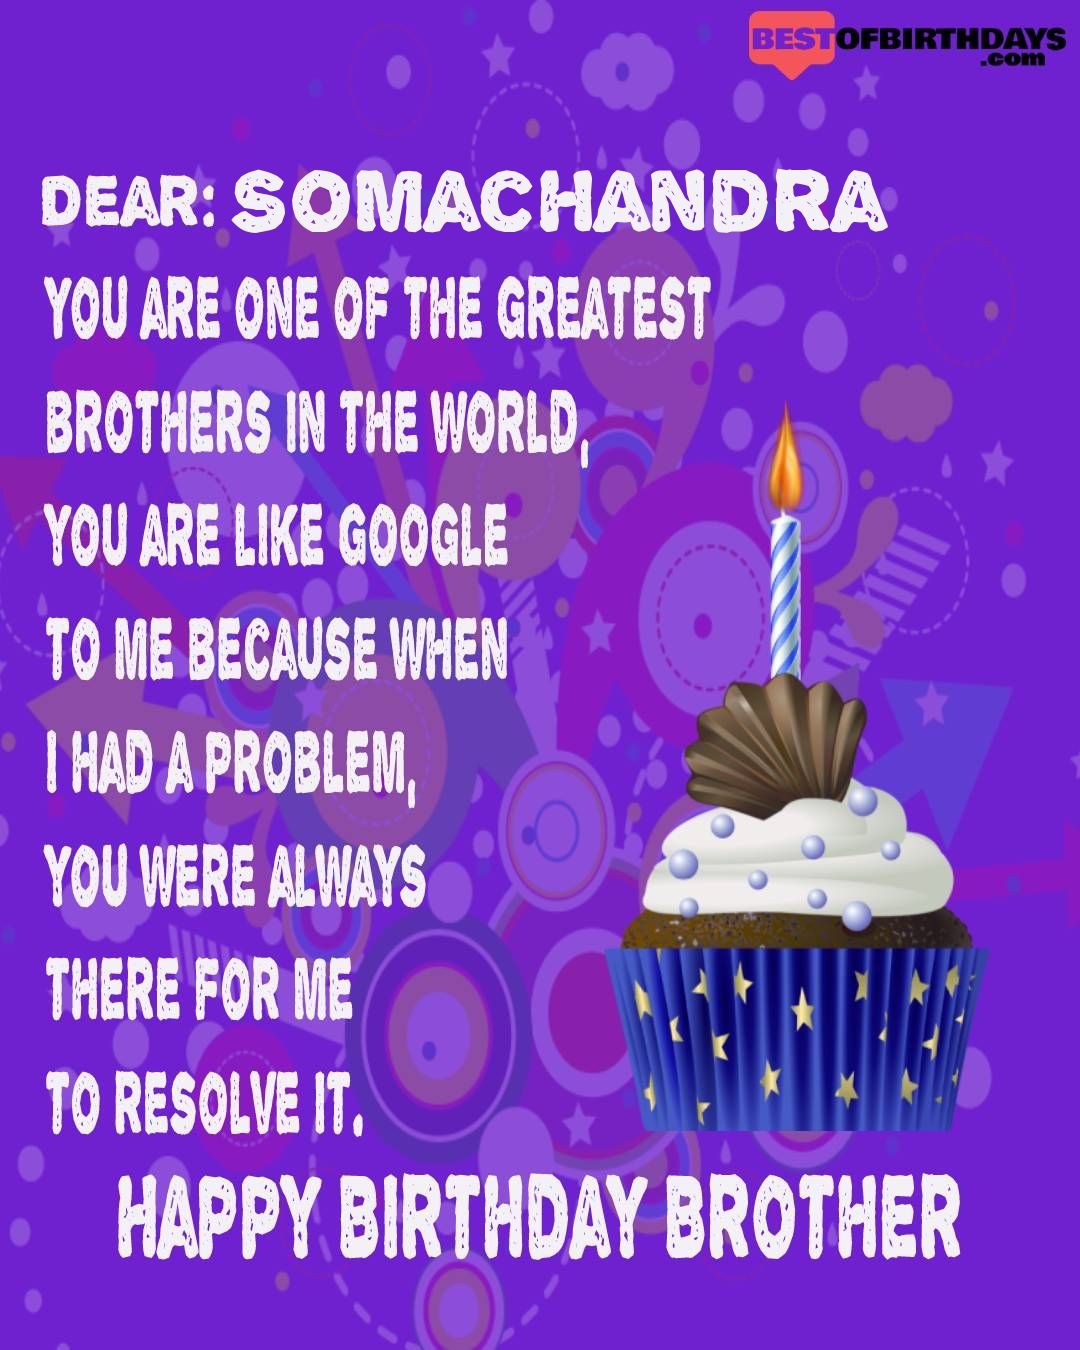 Happy birthday somachandra bhai brother bro